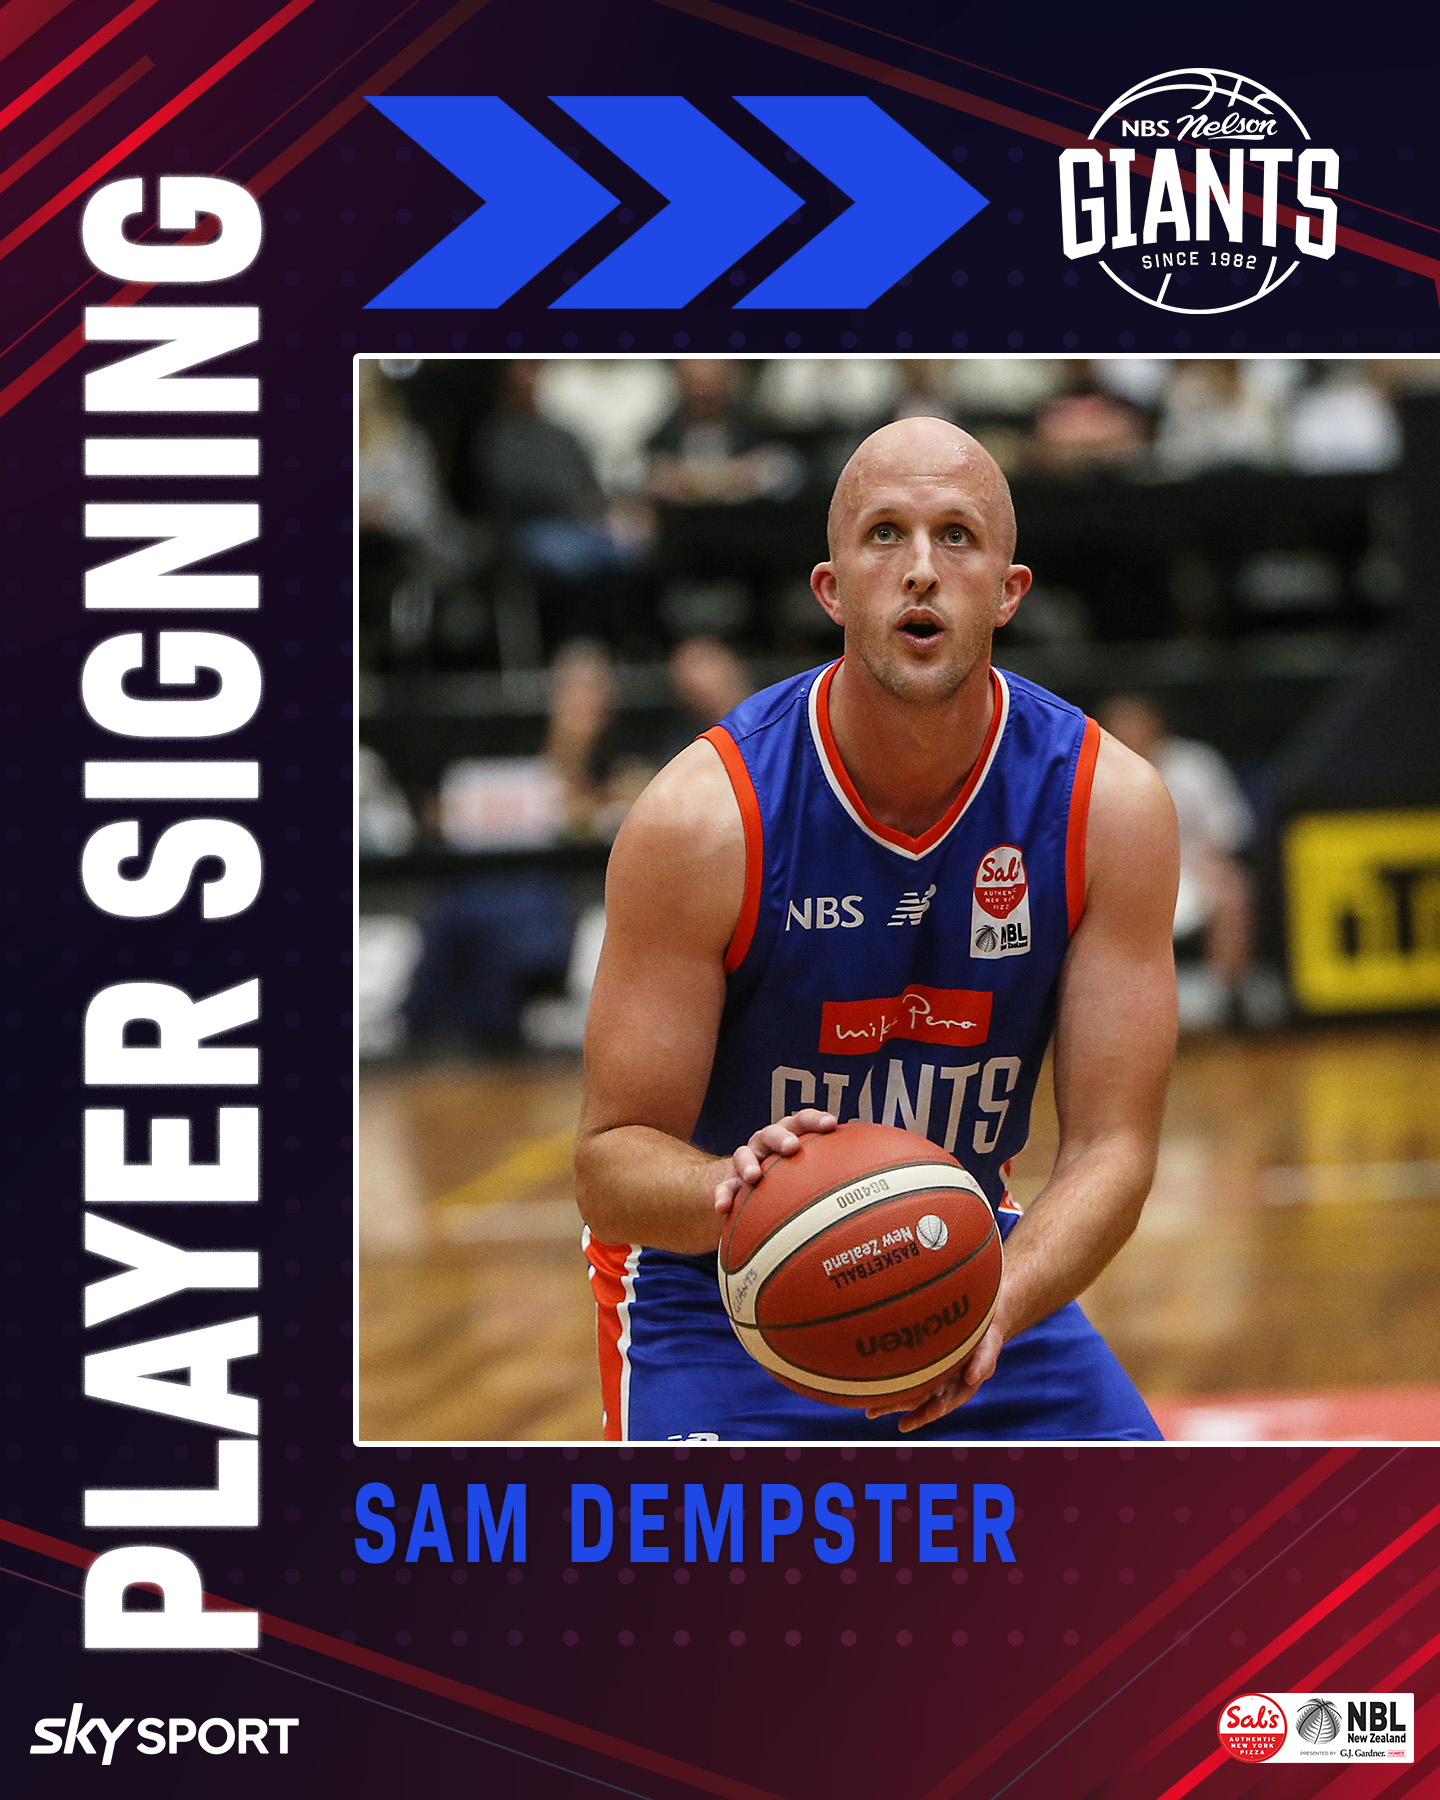 Sam Dempster